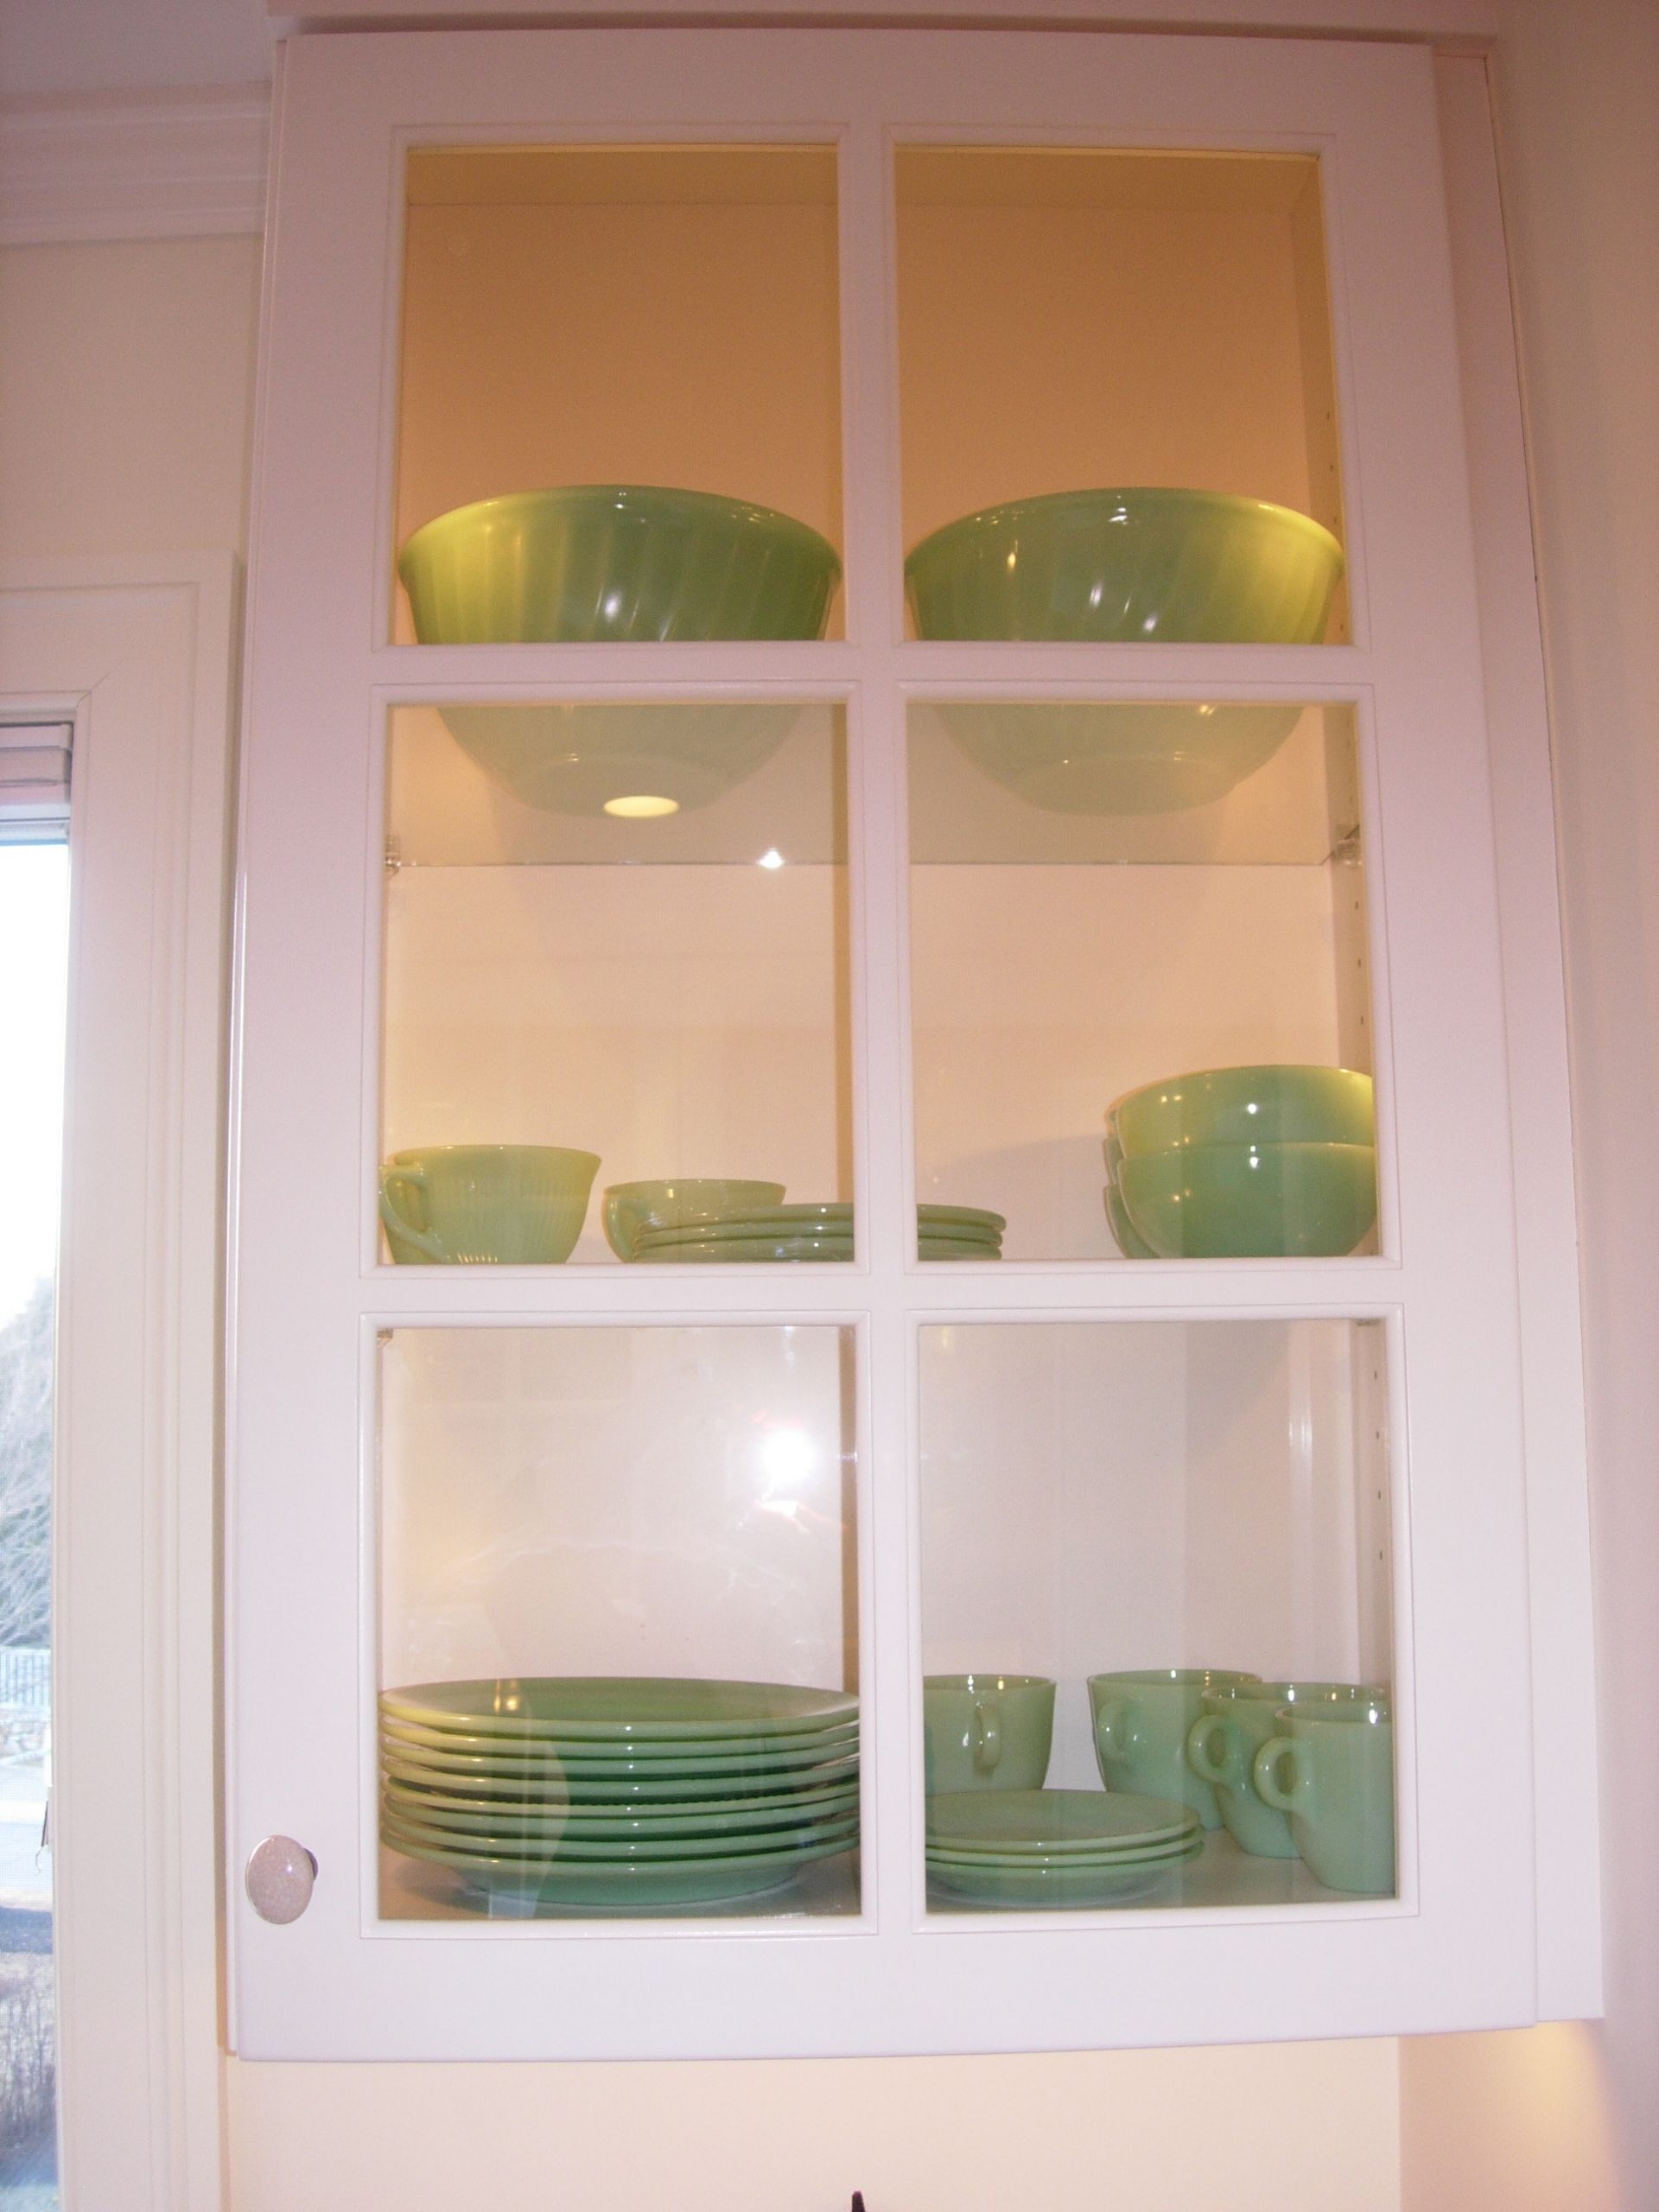 Inside Kitchen Cabinet Lighting
 Greenlightingpartner s Blog